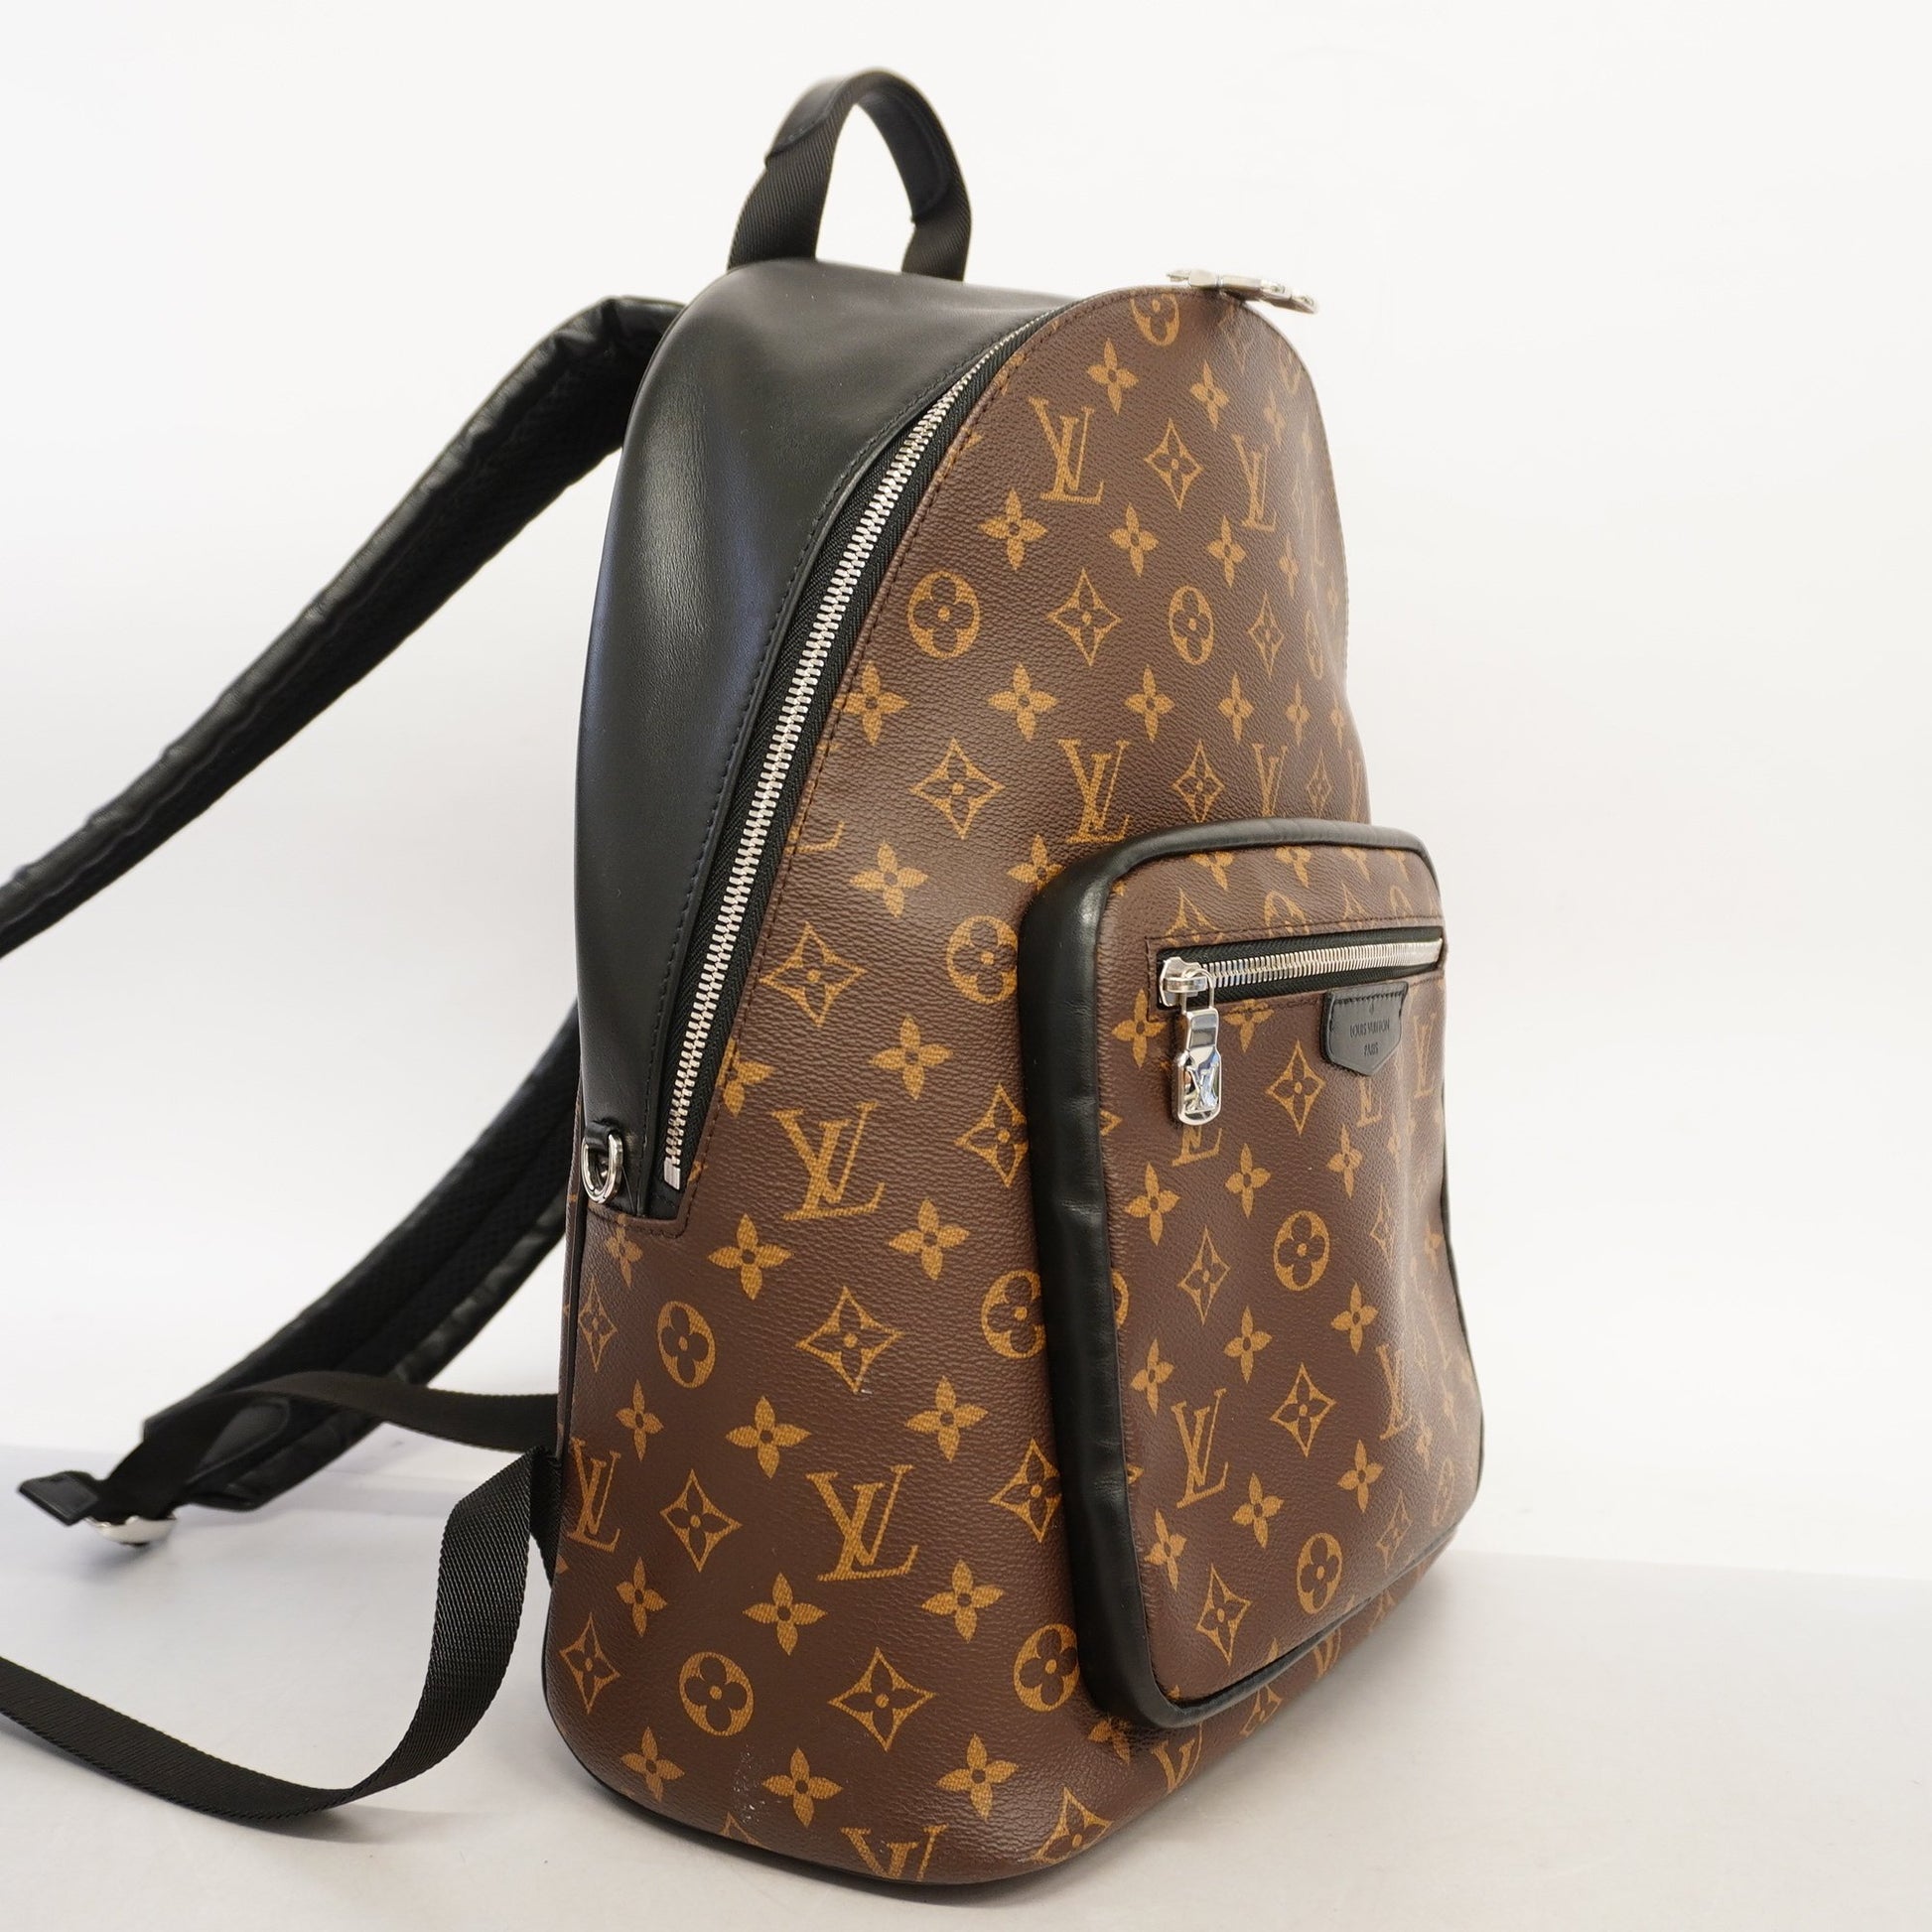 Buy [Used] Louis Vuitton Monogram Macassar Josh NV rucksack backpack  rucksack M45349 brown/black PVC bag M45349 from Japan - Buy authentic Plus  exclusive items from Japan